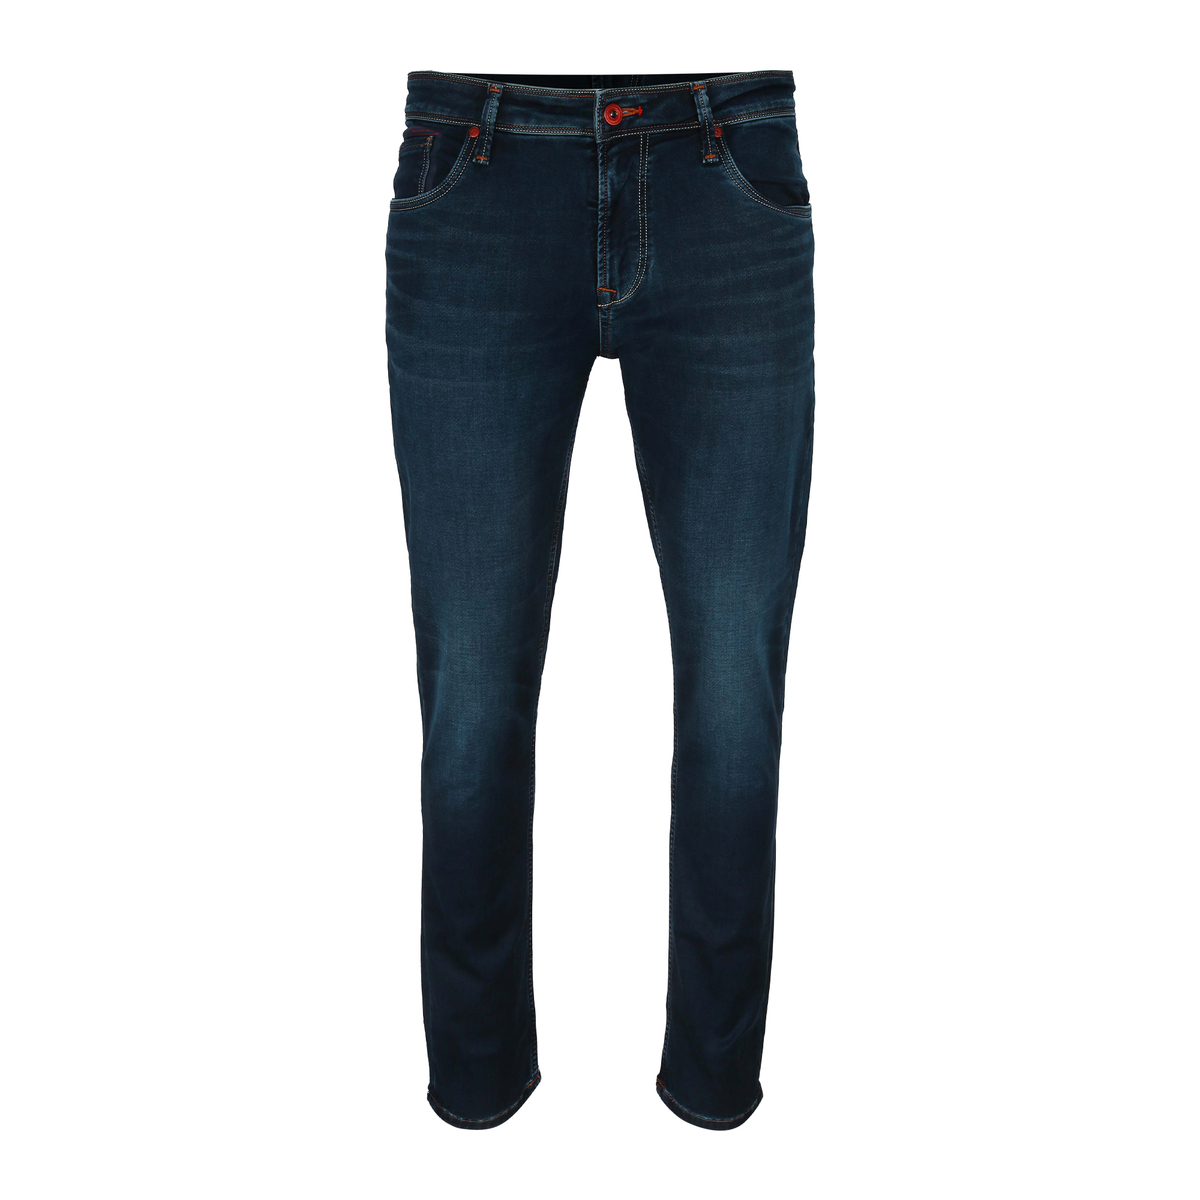 Killer Men's Slim Fit Jeans 9188-Dark Blue, 32